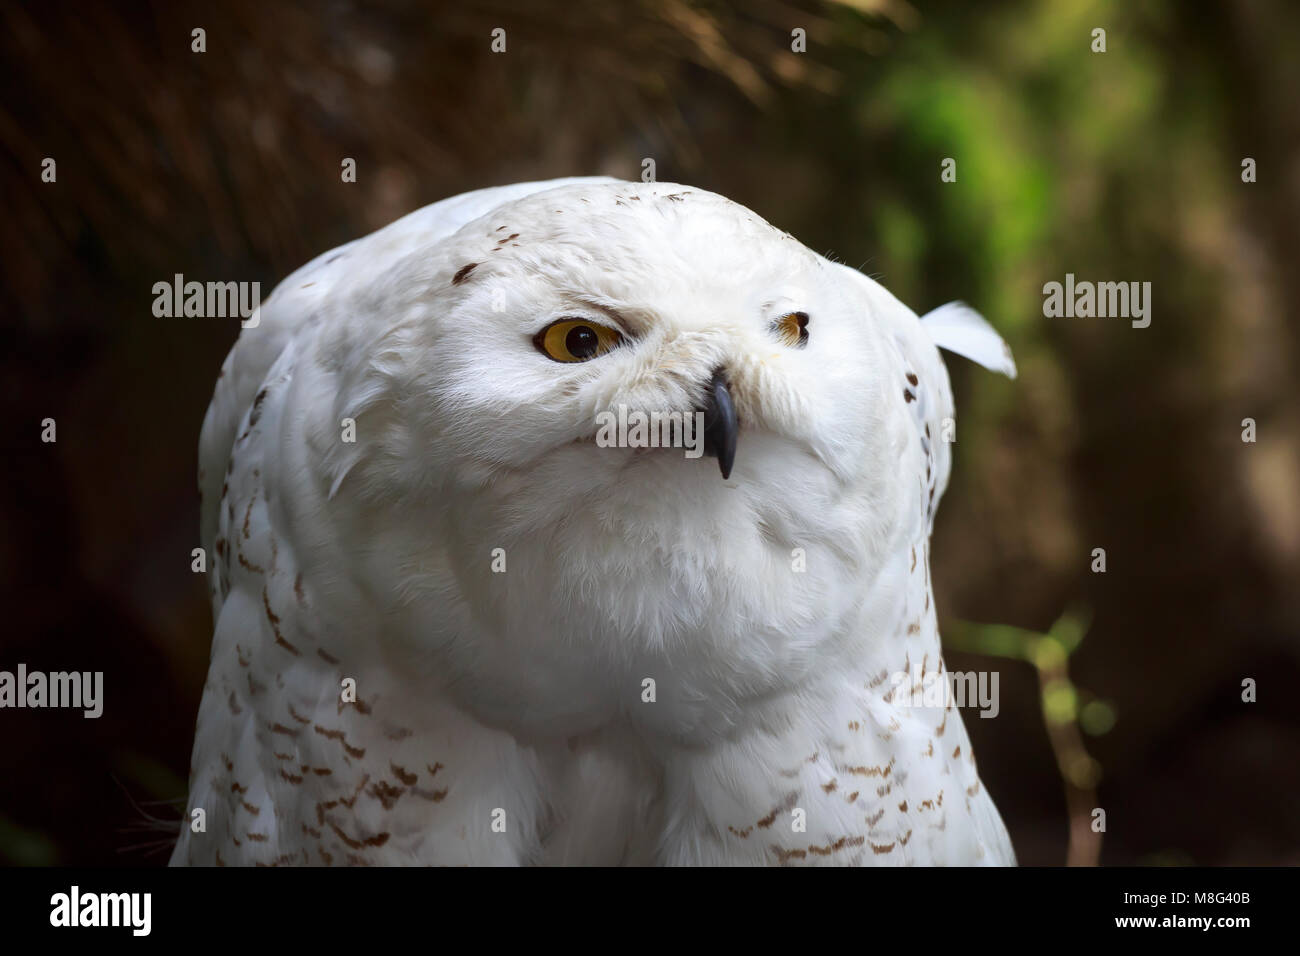 Closeup portrait of a white snowy owl (Bubo scandiacus) bird of prey on a dark background. Stock Photo